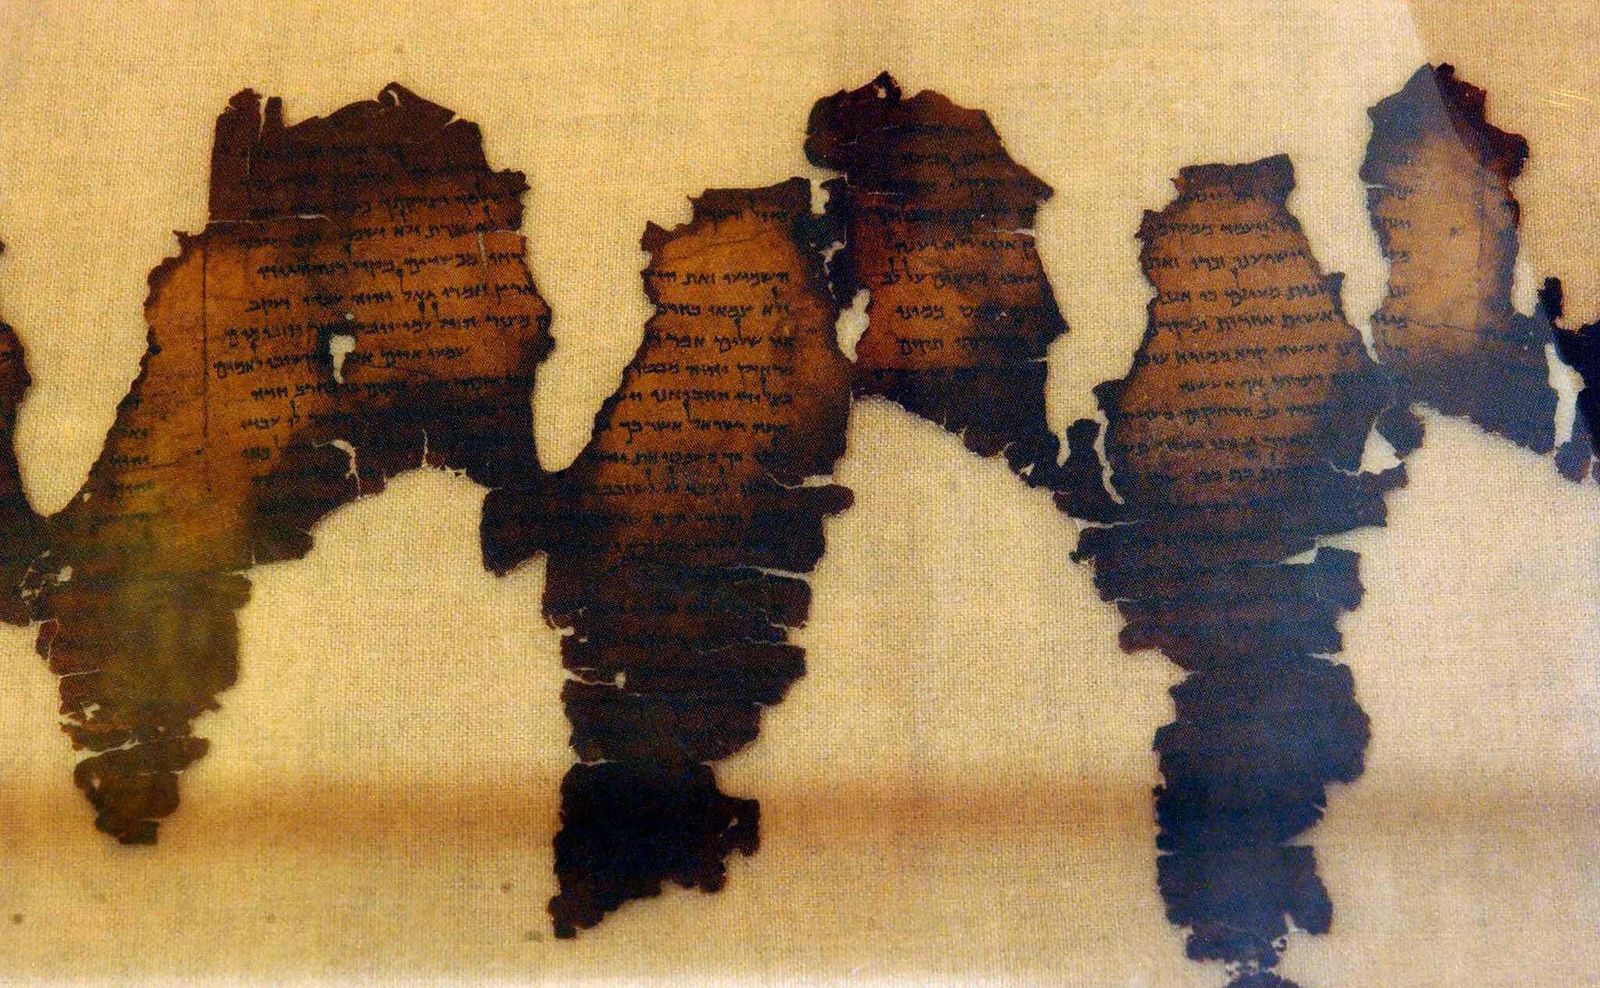 Dead Sea scrolls study raises new questions over texts' origins, Archaeology